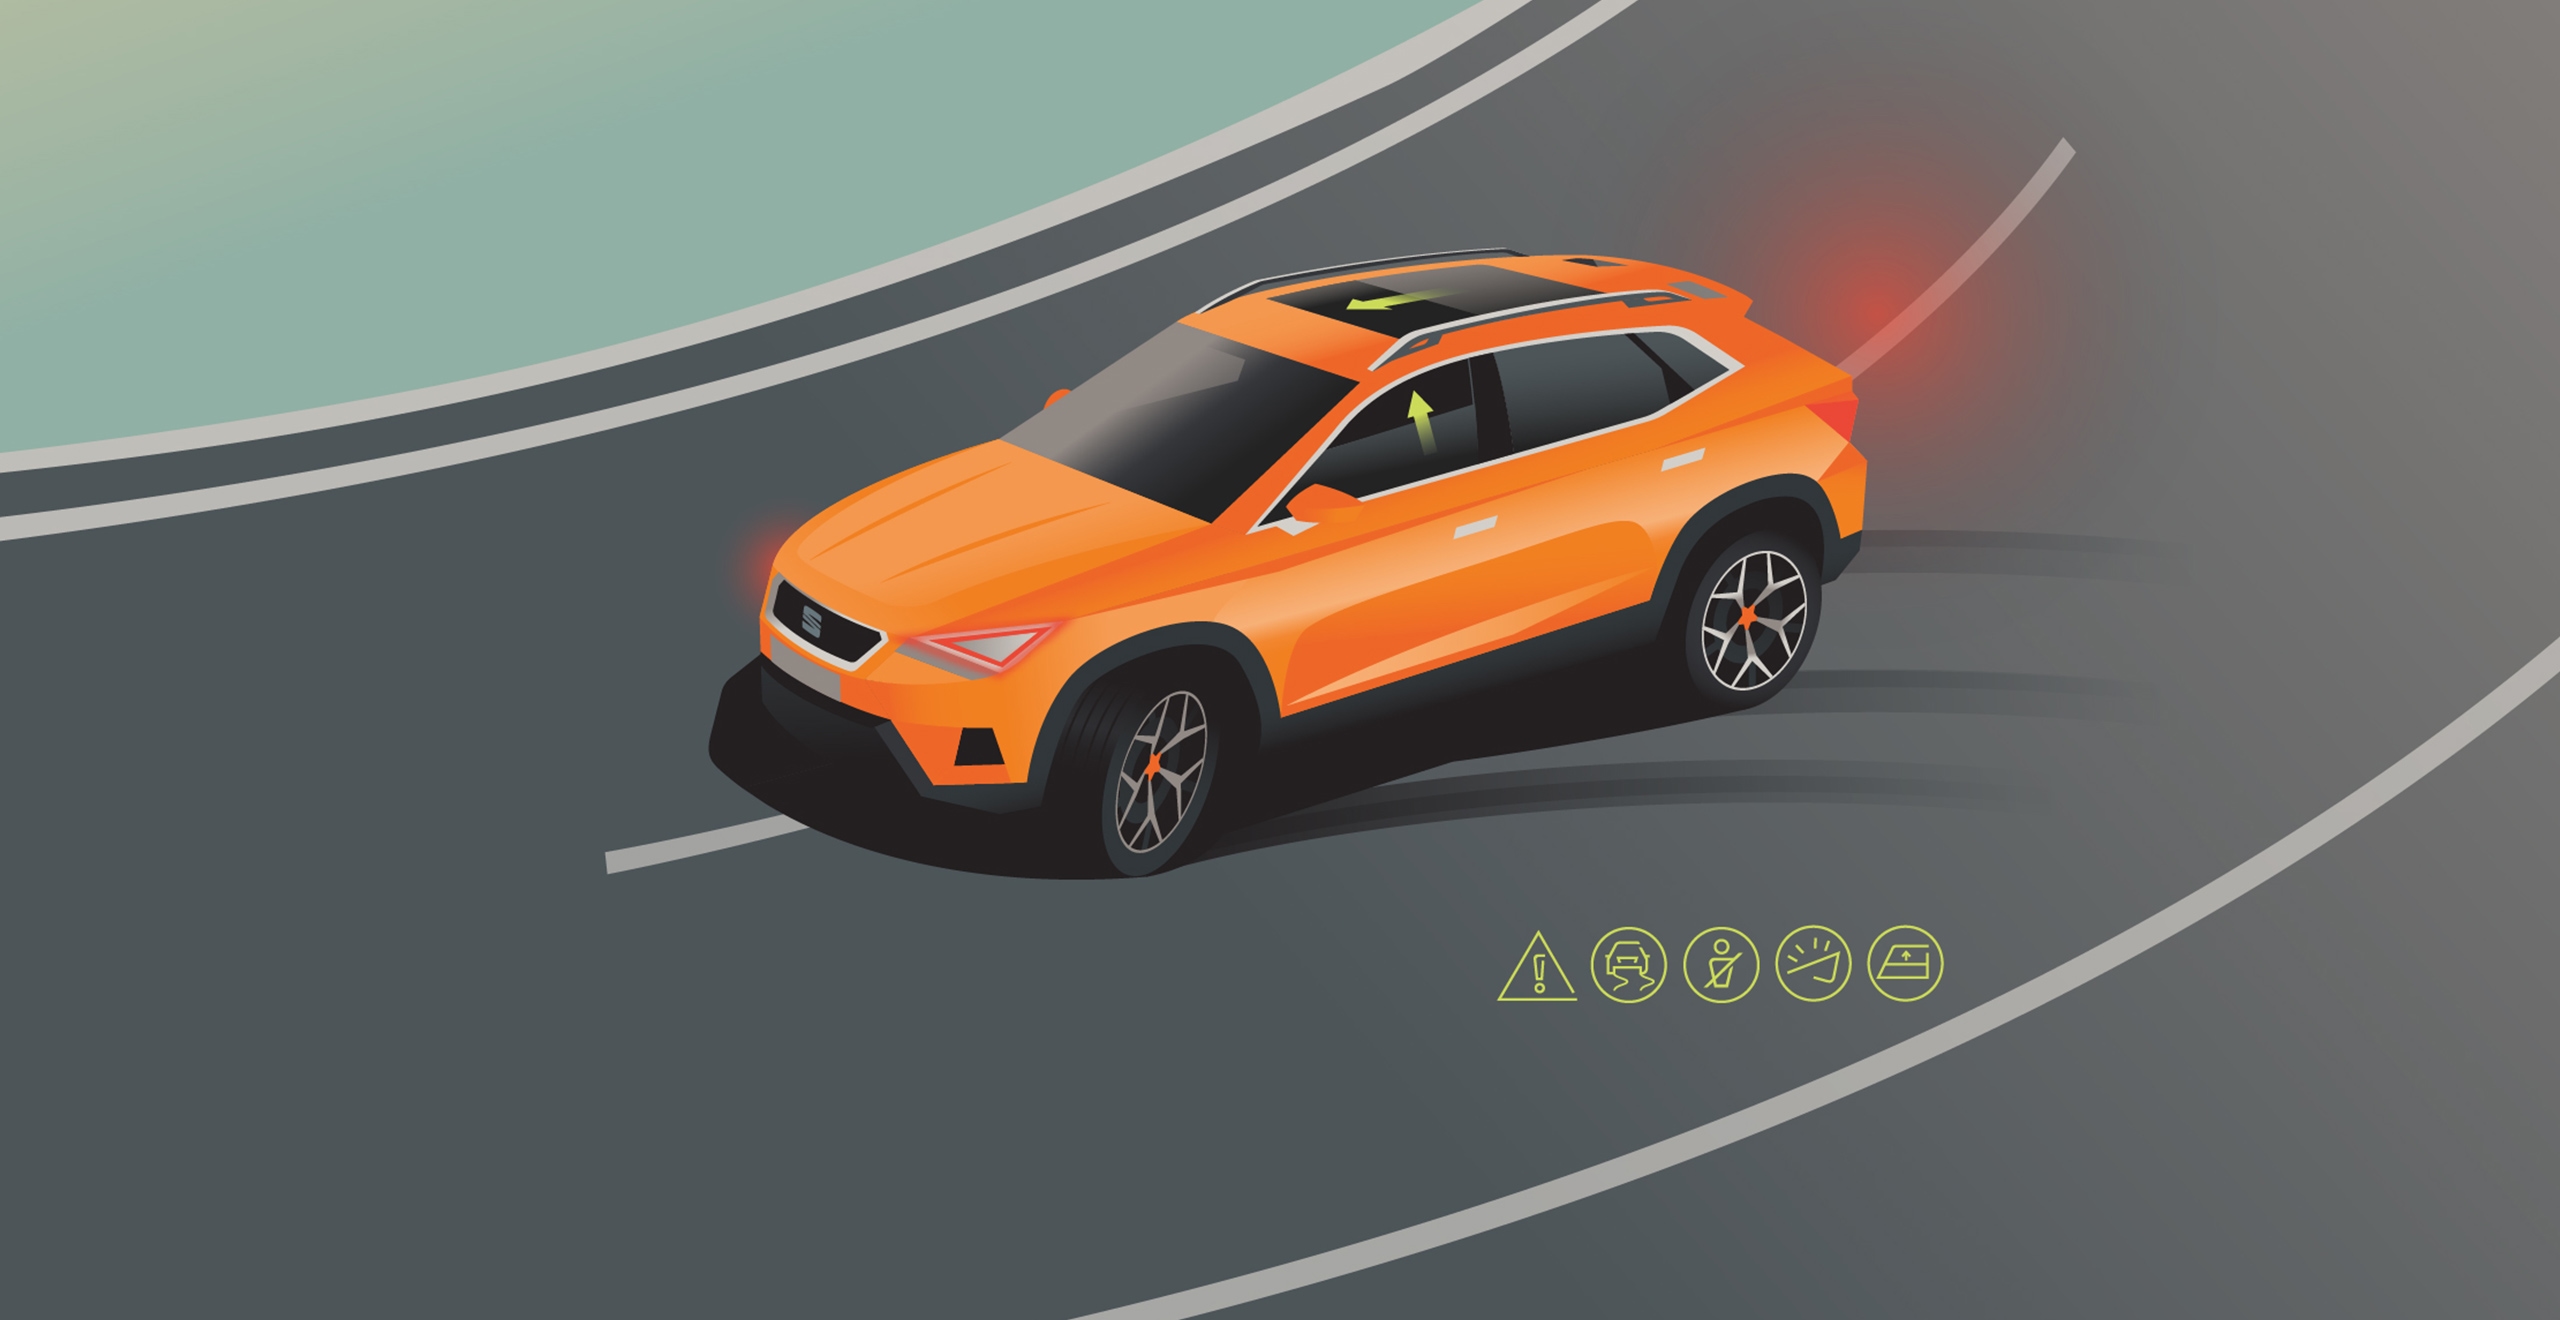 SEAT Ateca pre crash assist safety feature illustration